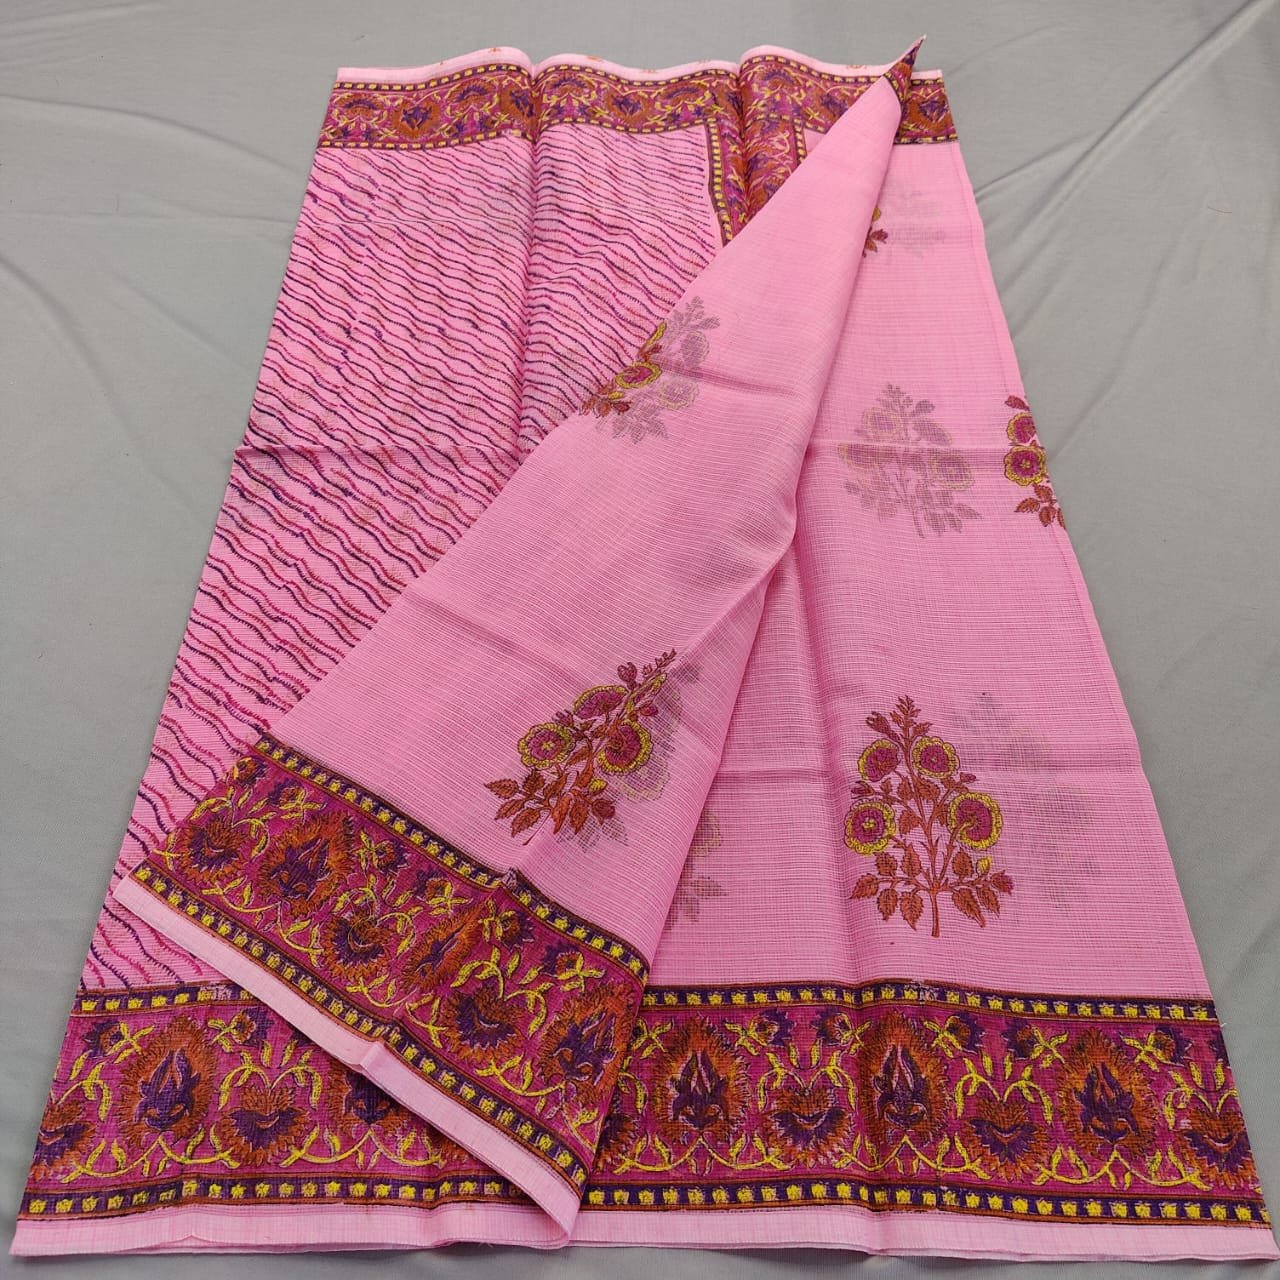 Edathal Star Collection's Attractive Kota Doria Mix Cotton Block Printed Saree With Blouse - Multi Colour | Cotton Saree With Blouse